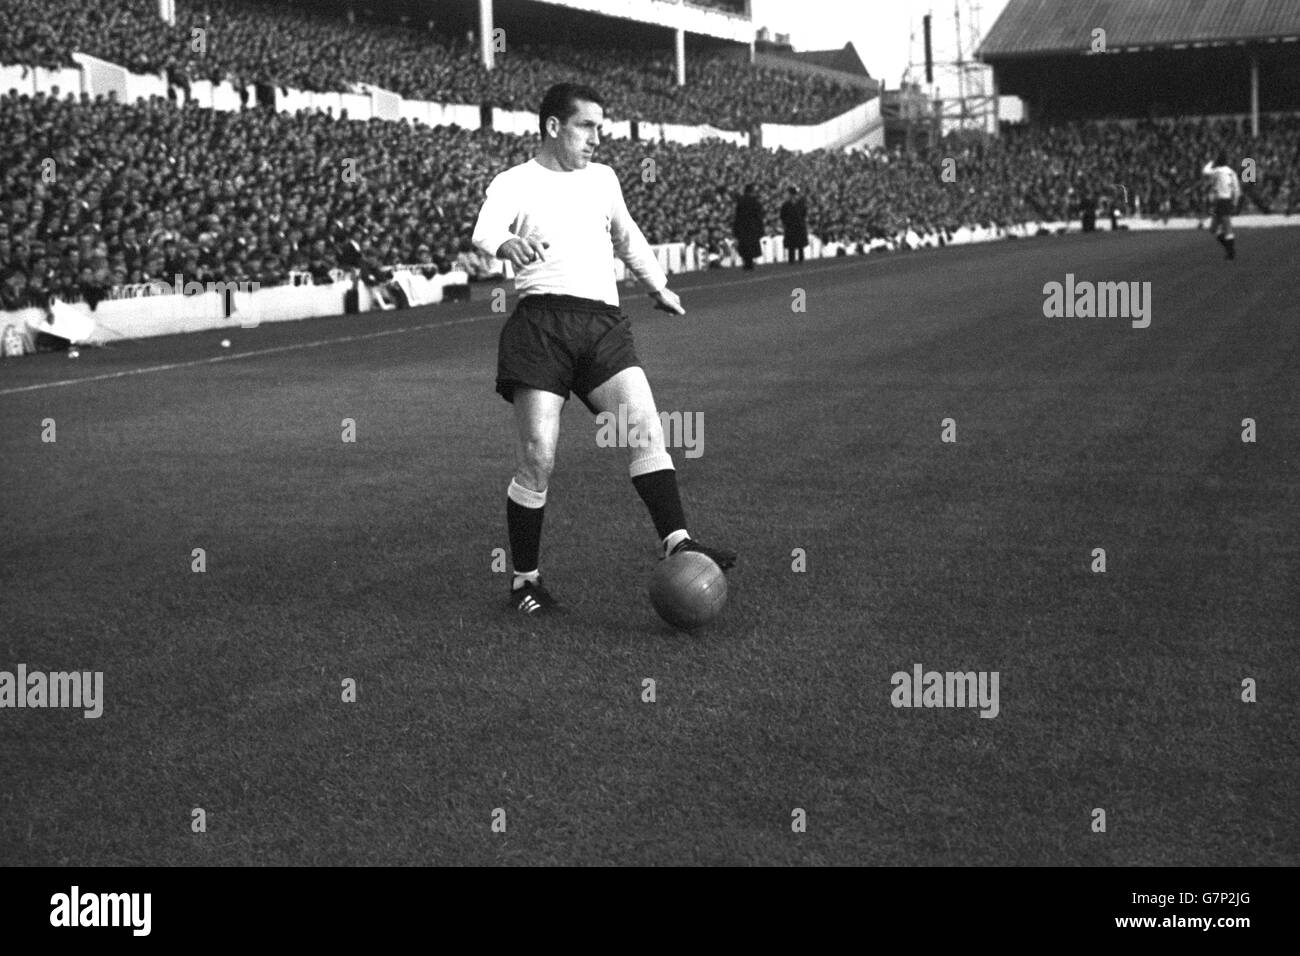 Fußball - Tottenham Hotspur - Dave Mackay. Dave Mackay von Tottenham Hotspur, der eine besondere Auszeichnung vom Anglo-American Sporting Club erhalten soll. Stockfoto